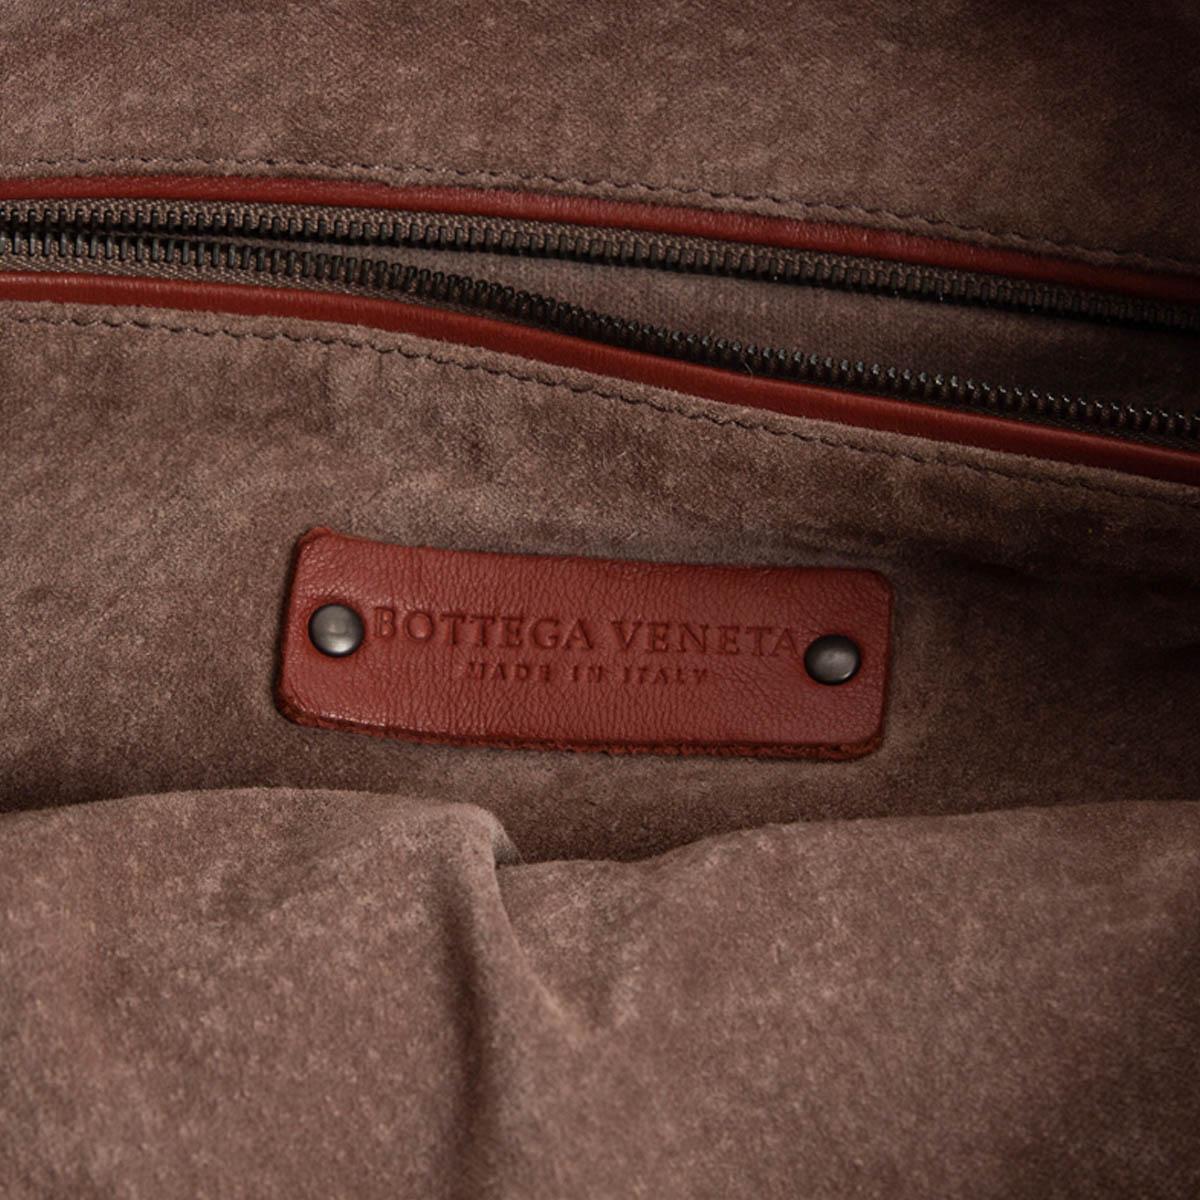 BOTTEGA VENETA brick red leather INTRECCIATO VENETA LARGE Shoulder Bag 1